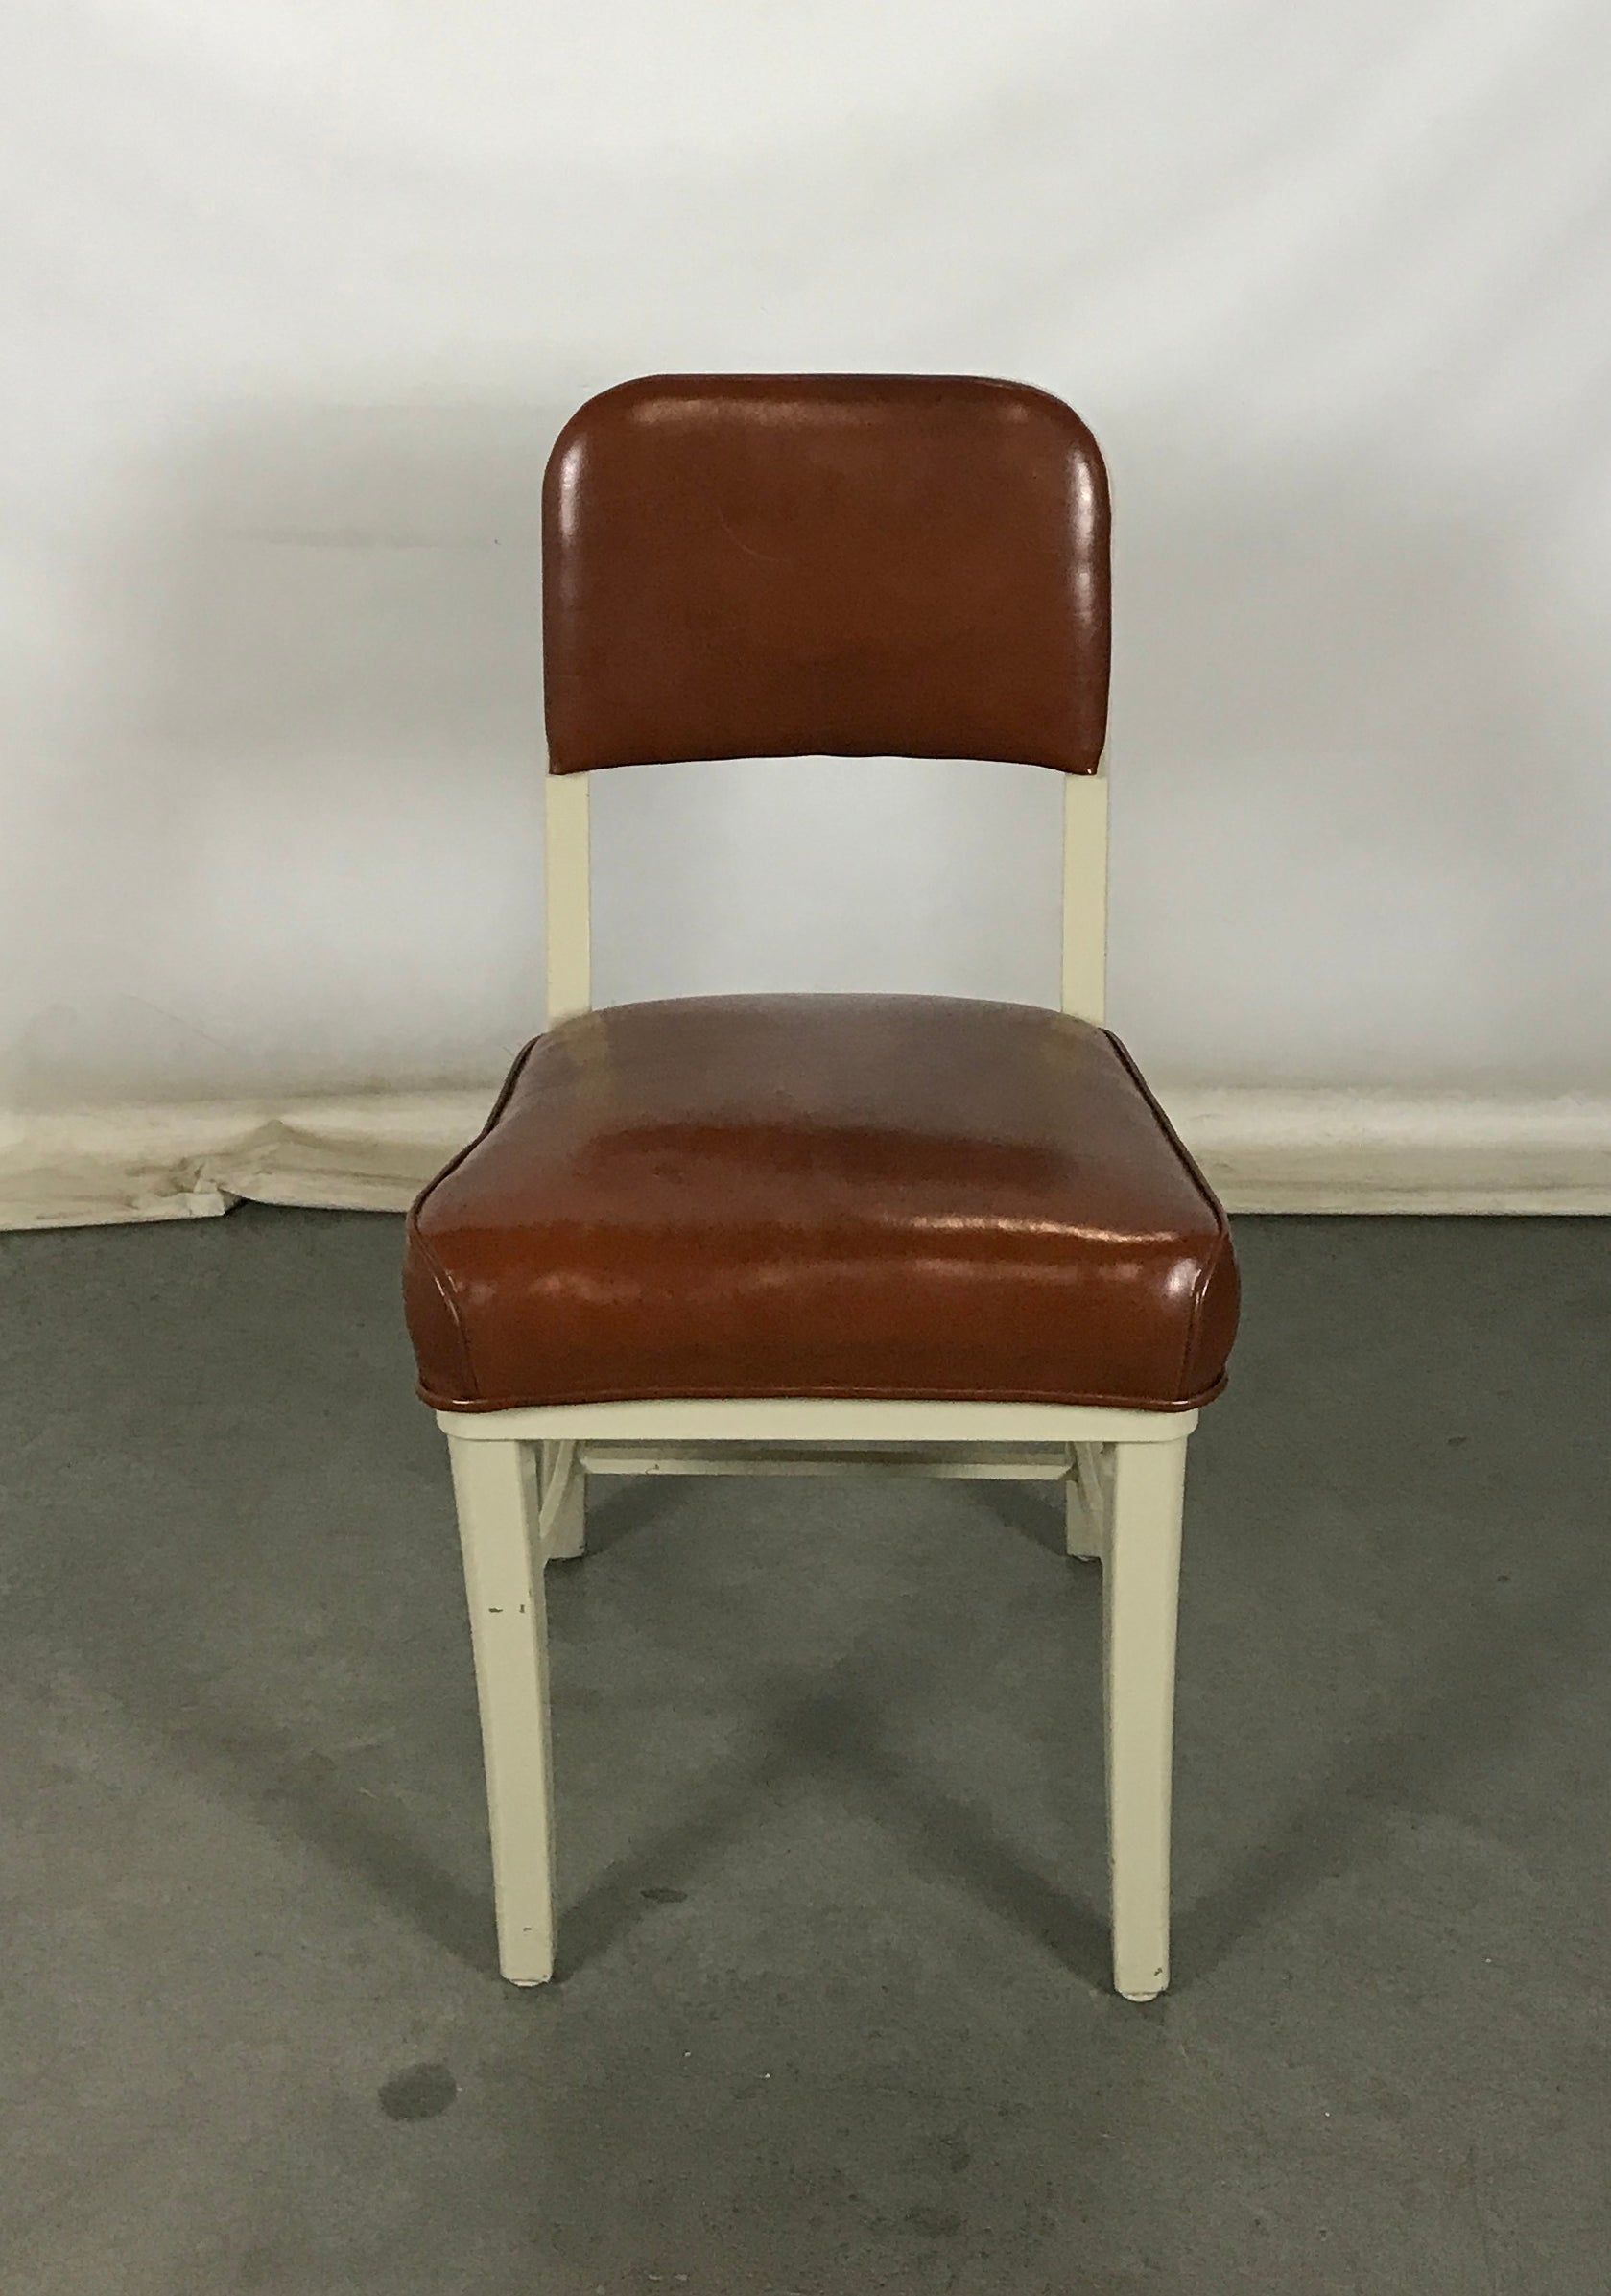 Tan and Brown Metal Chair